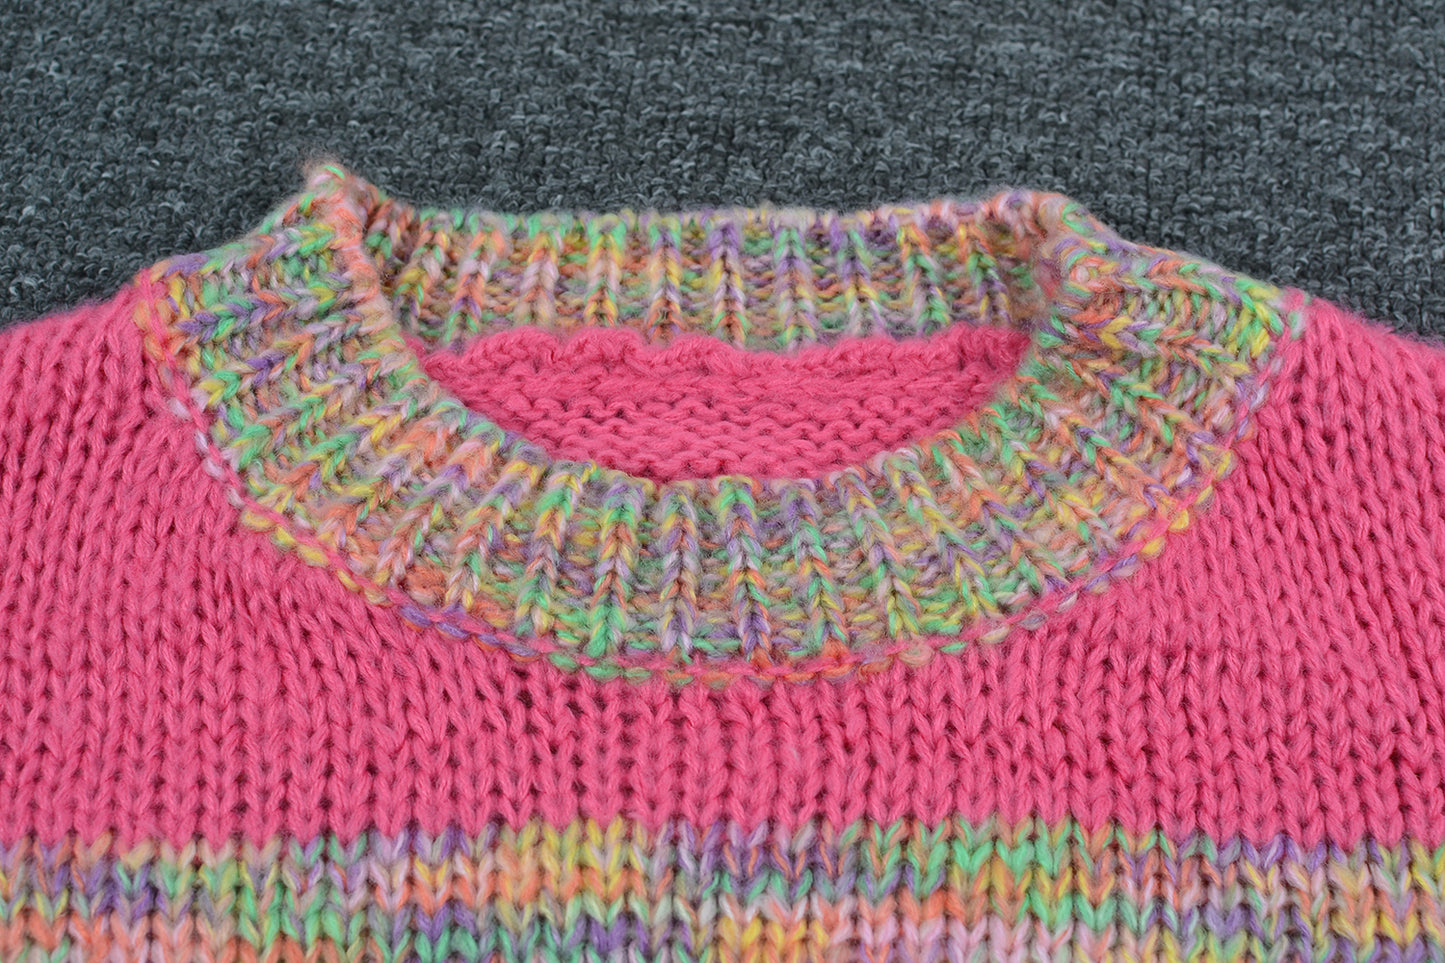 BamBam Autumn Winter Women's Sweater Loose Round Neck Patchwork Knitting Shirt Pullover Fashion Sweater - BamBam